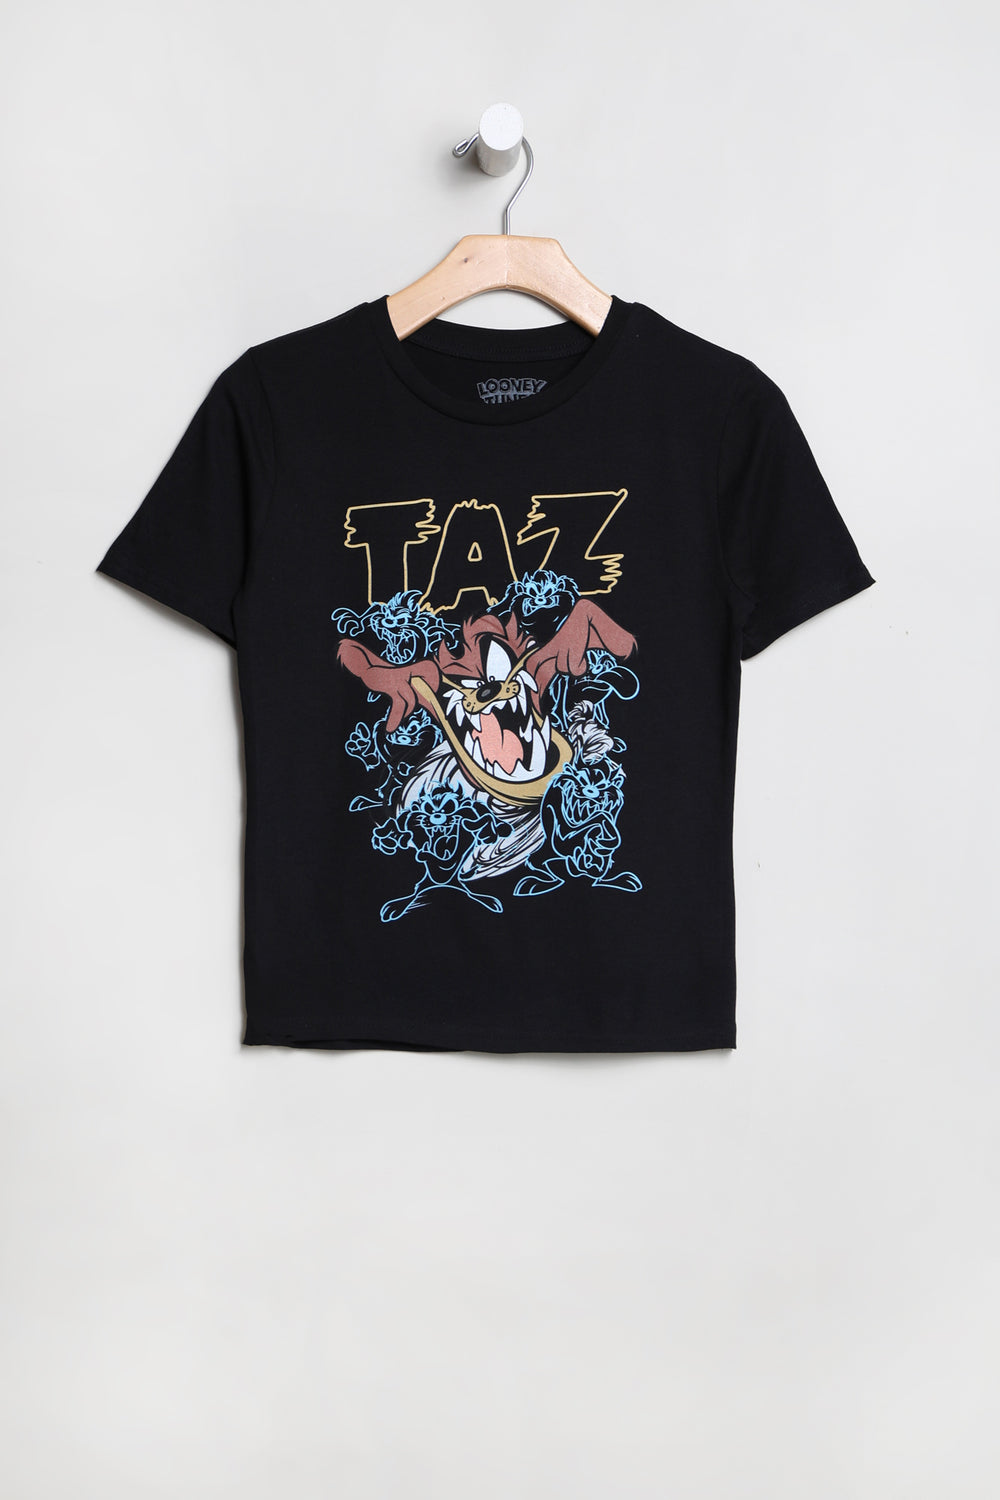 Youth Taz The Tasmanian Devil Graphic T-Shirt Black